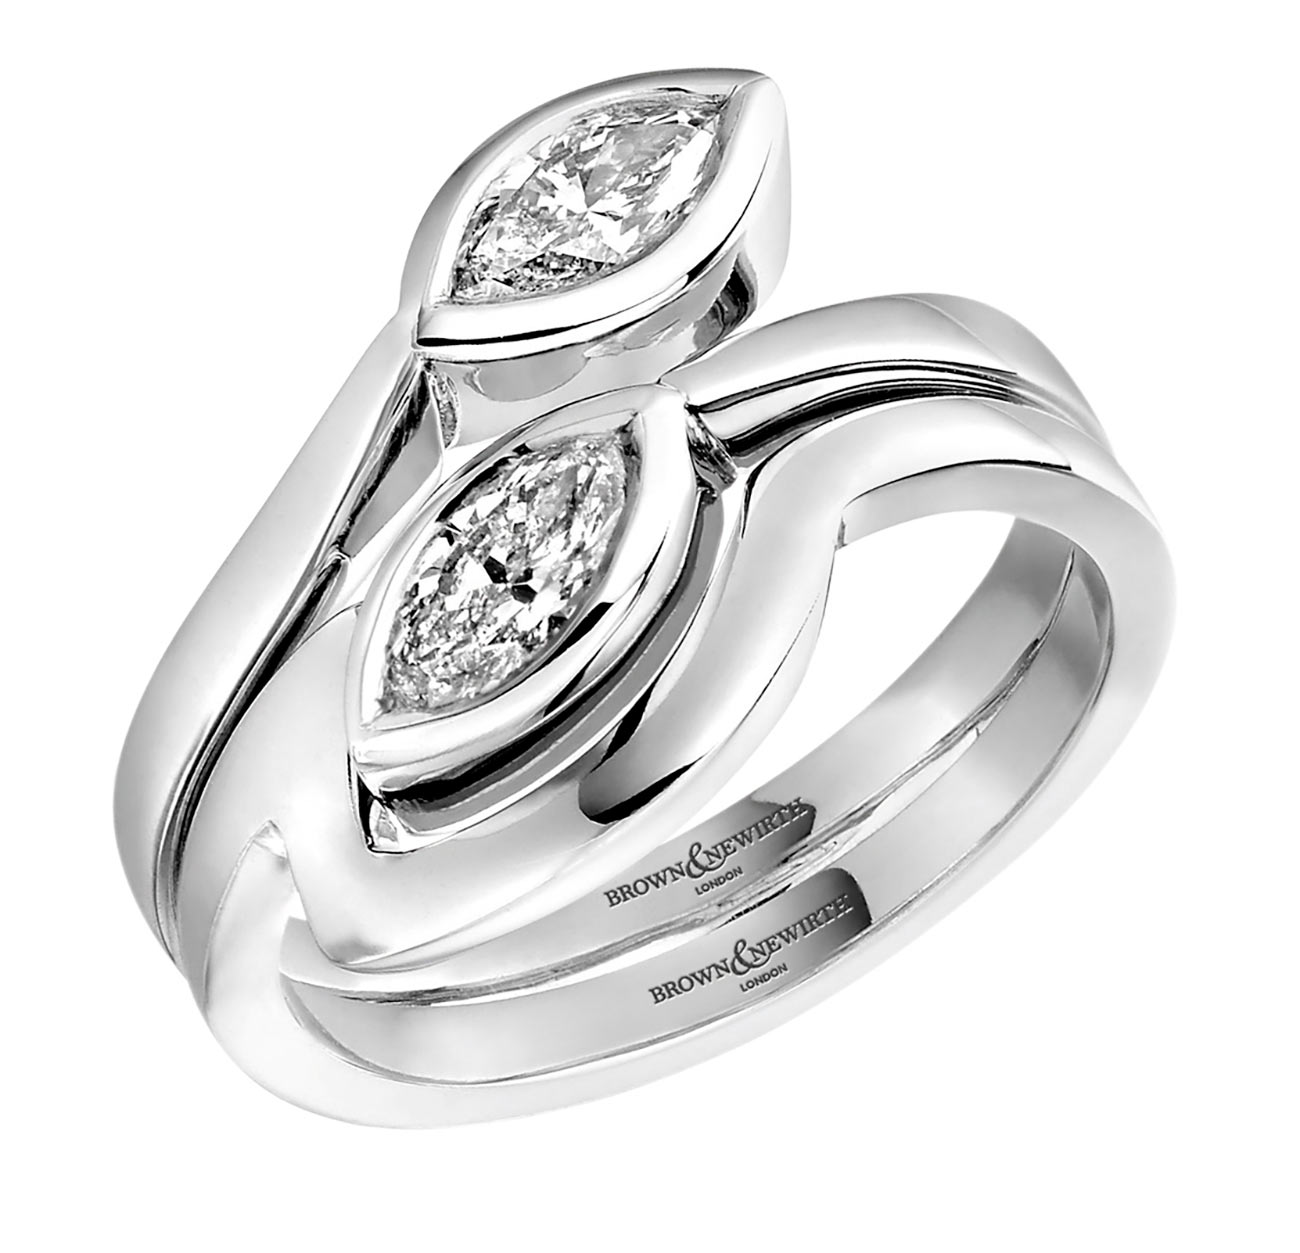 Drakes Jewellers Ring Feature Wed Wedding Cornwall Devon Bride4